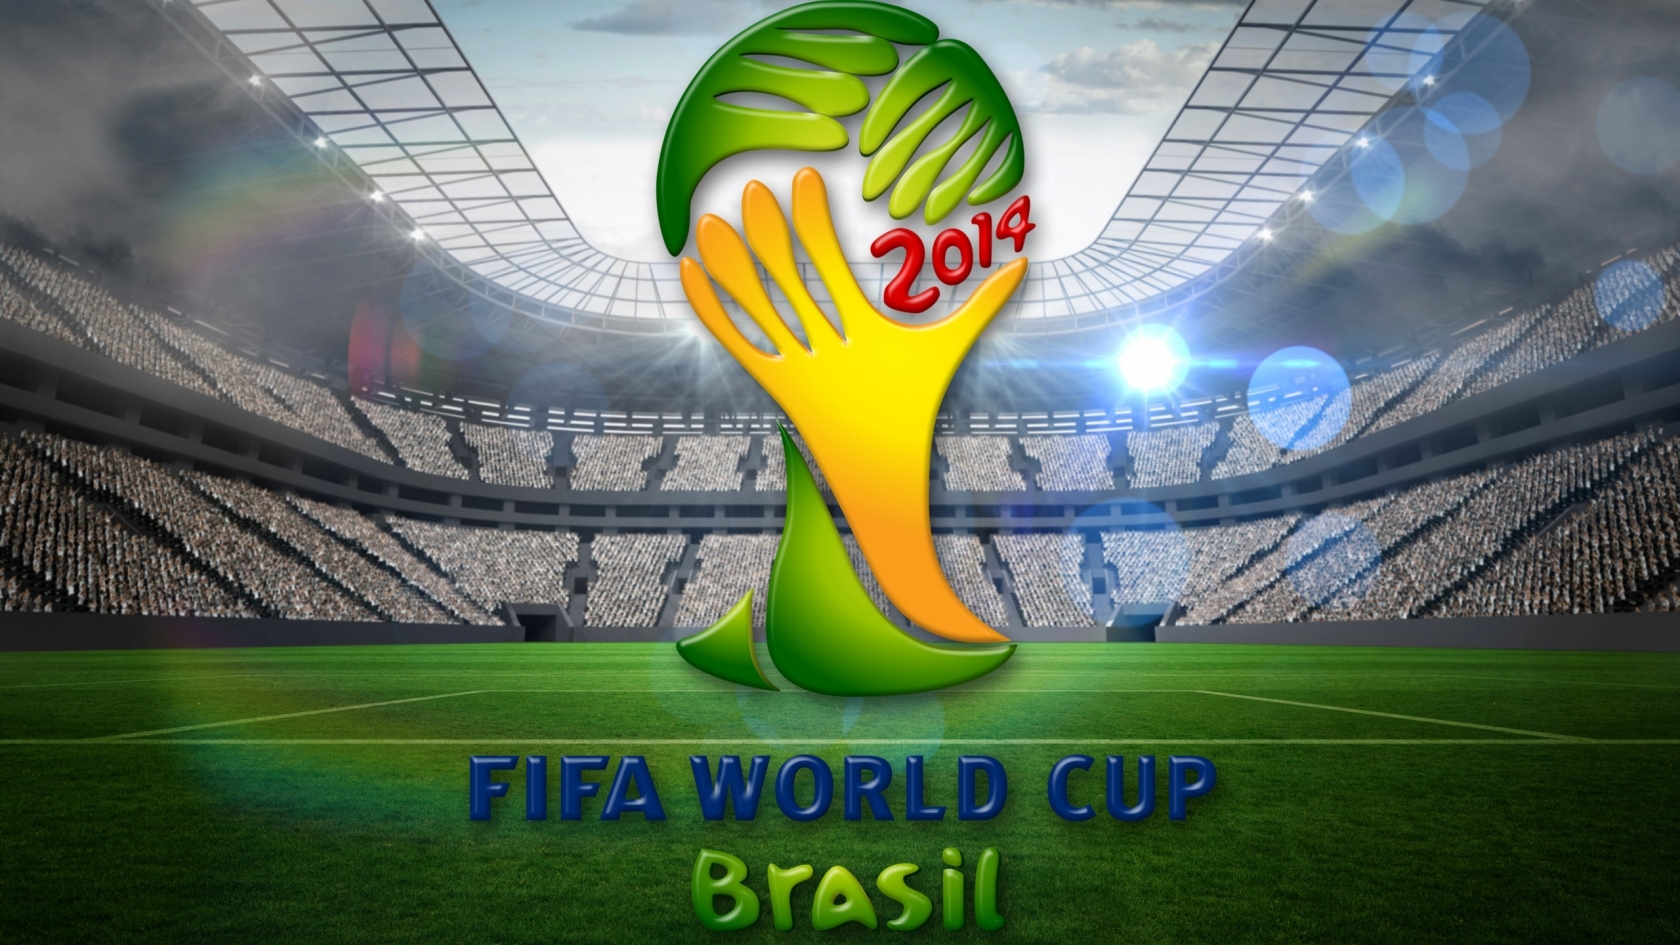 2014 Brasil World Cup for 1680 x 945 HDTV resolution